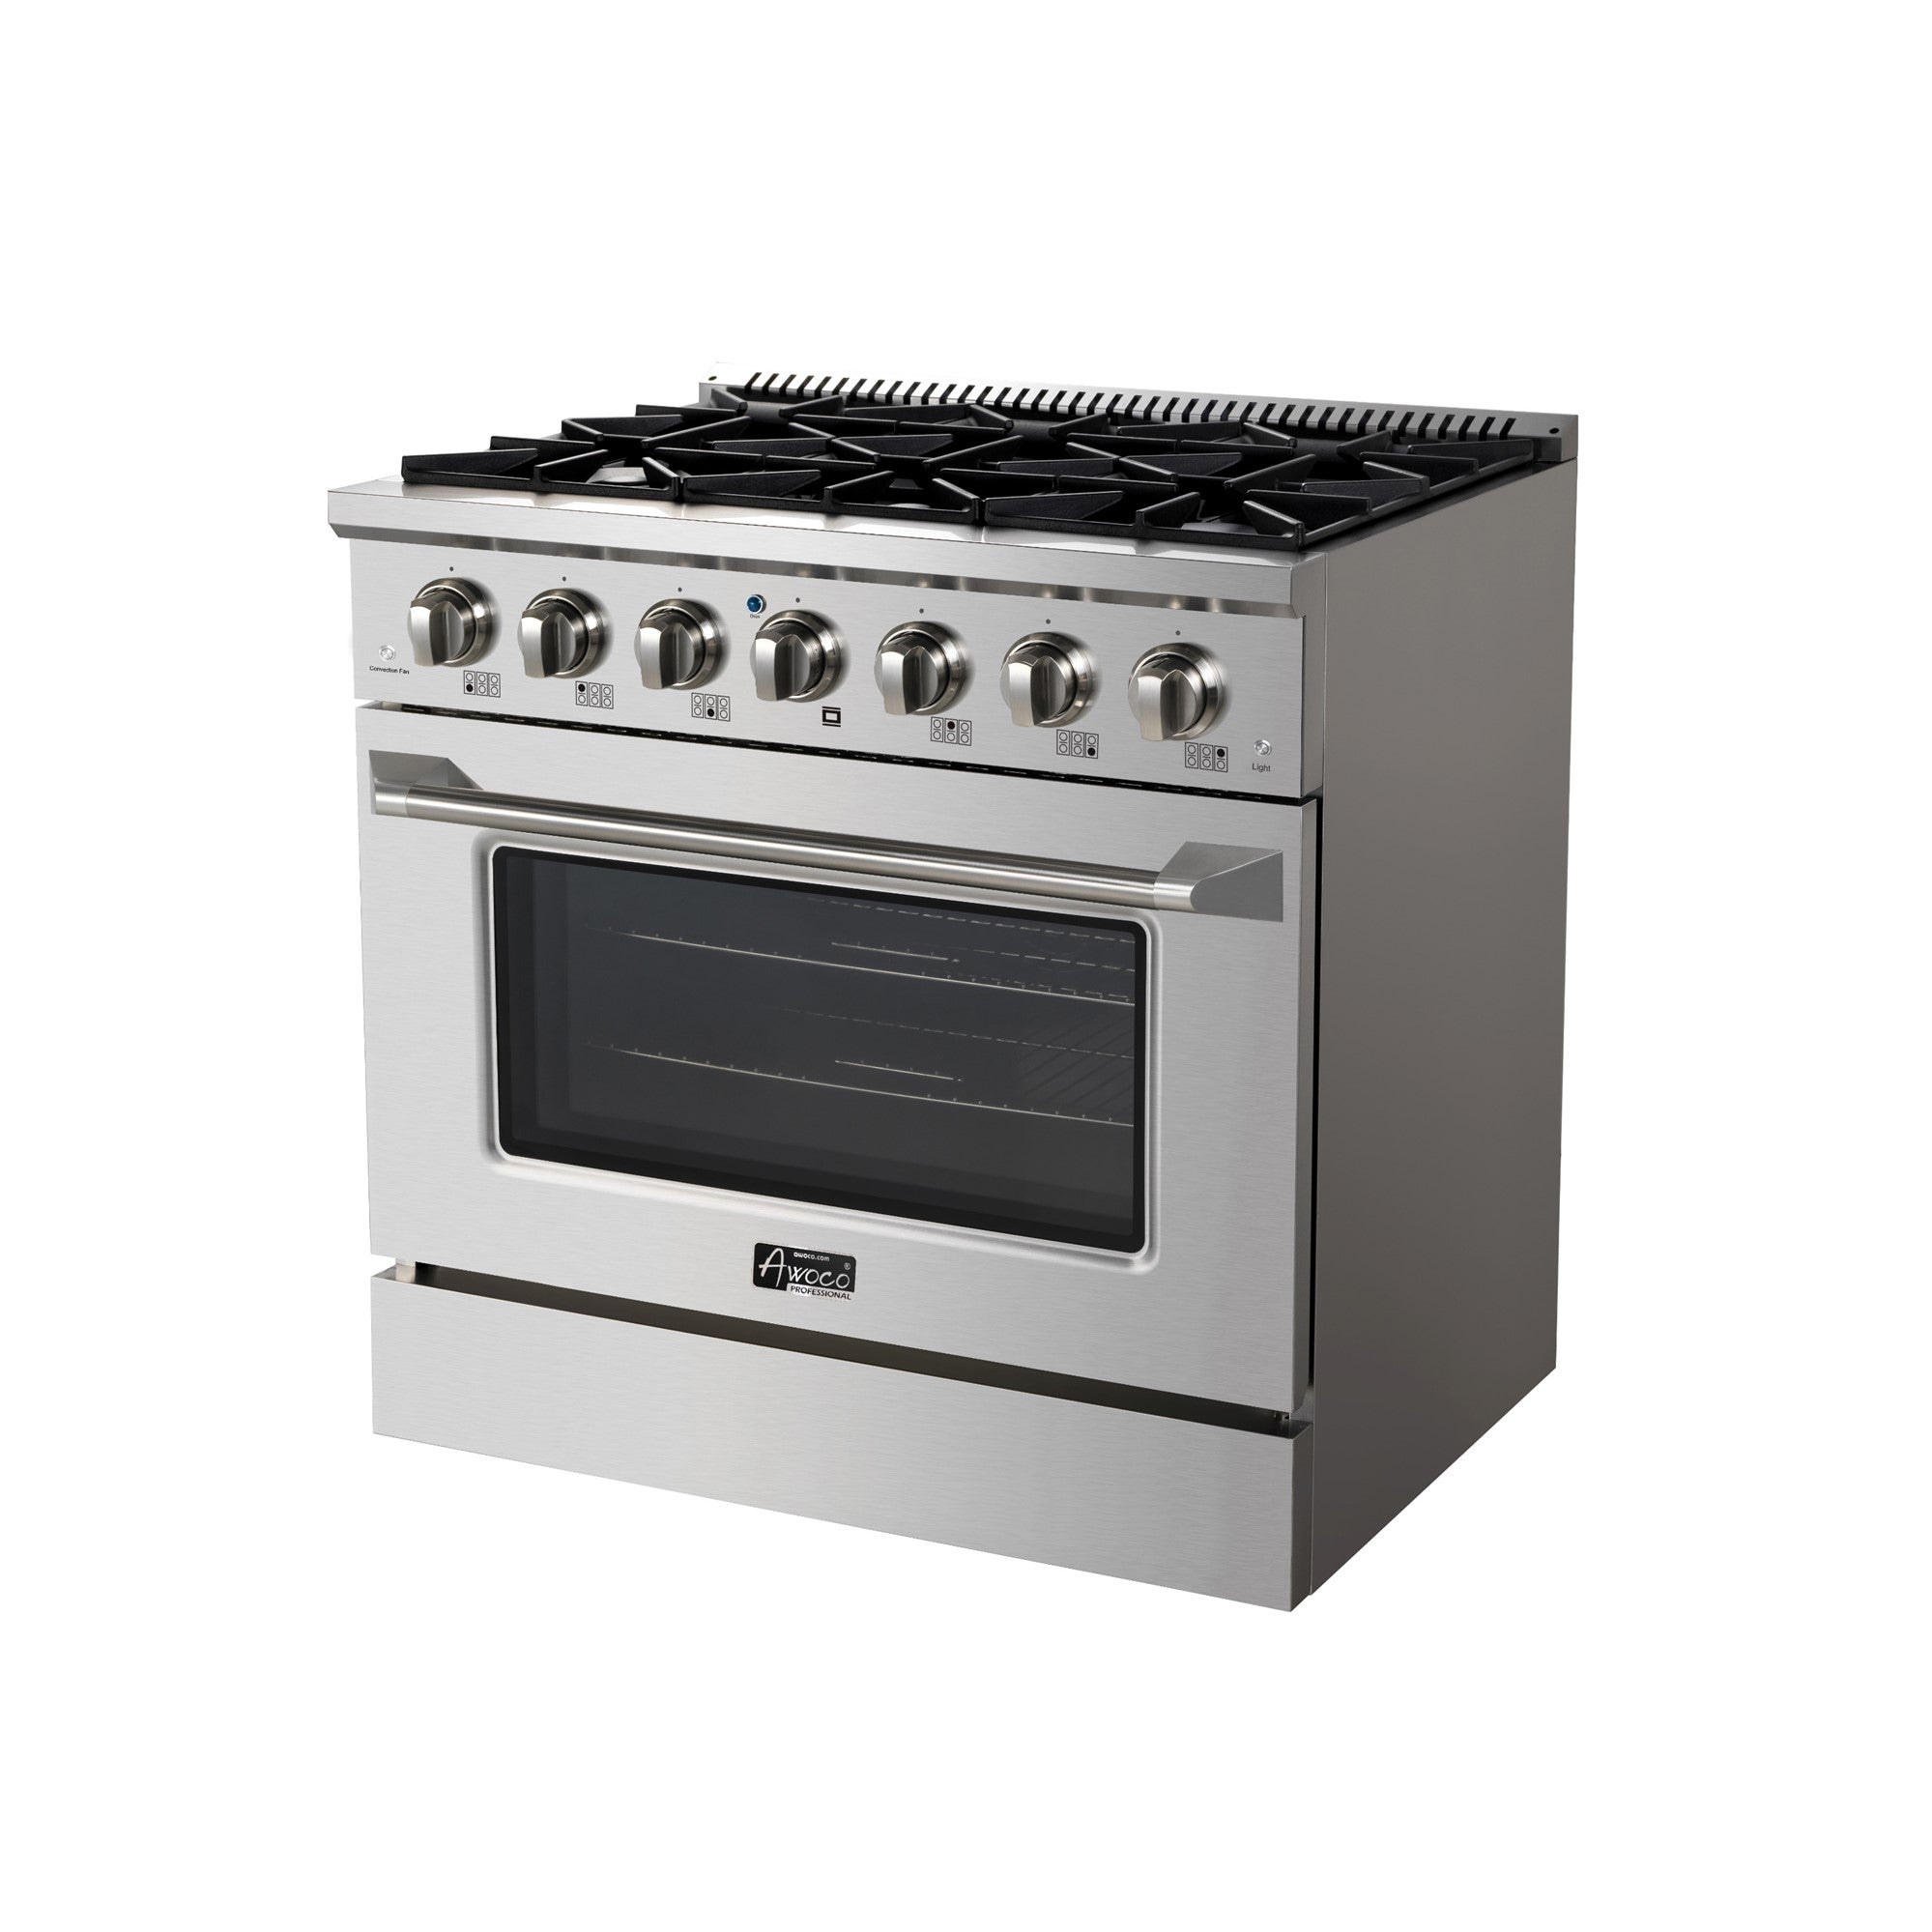 Cooking - Indoor gas stove rectangular grill vs. Gas ba